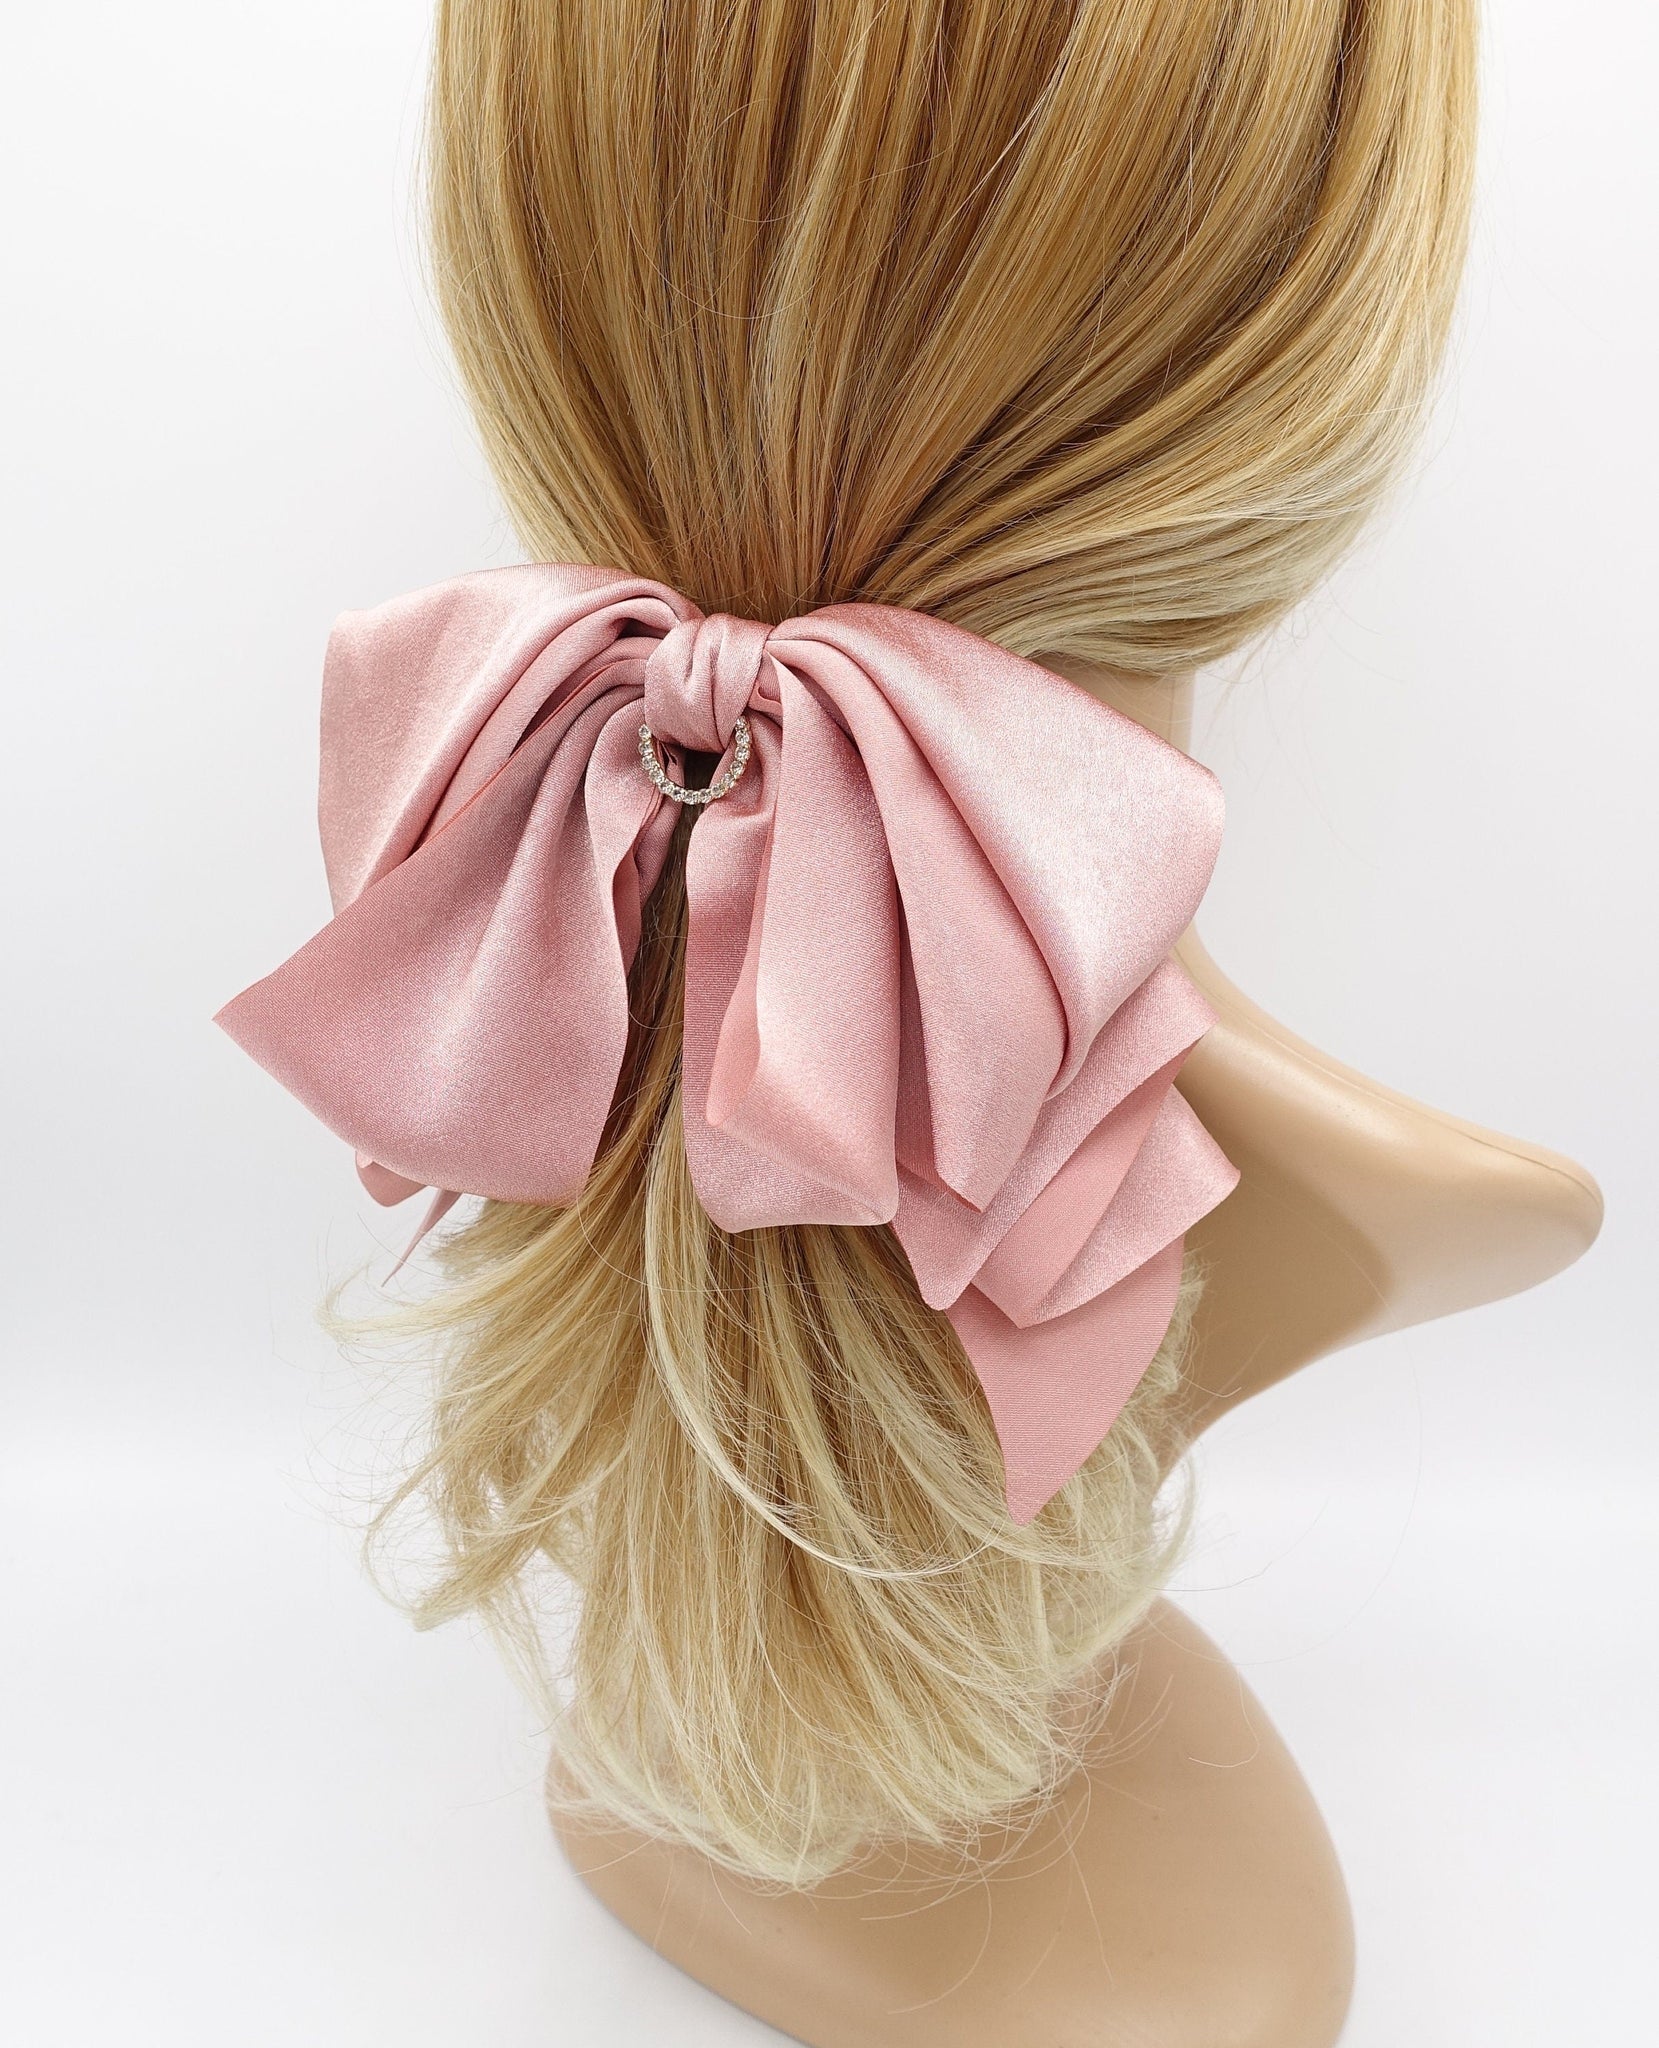 veryshine.com Barrette (Bow) Pink satin hair bow, layered hair bow, rhinestone hair bow for women